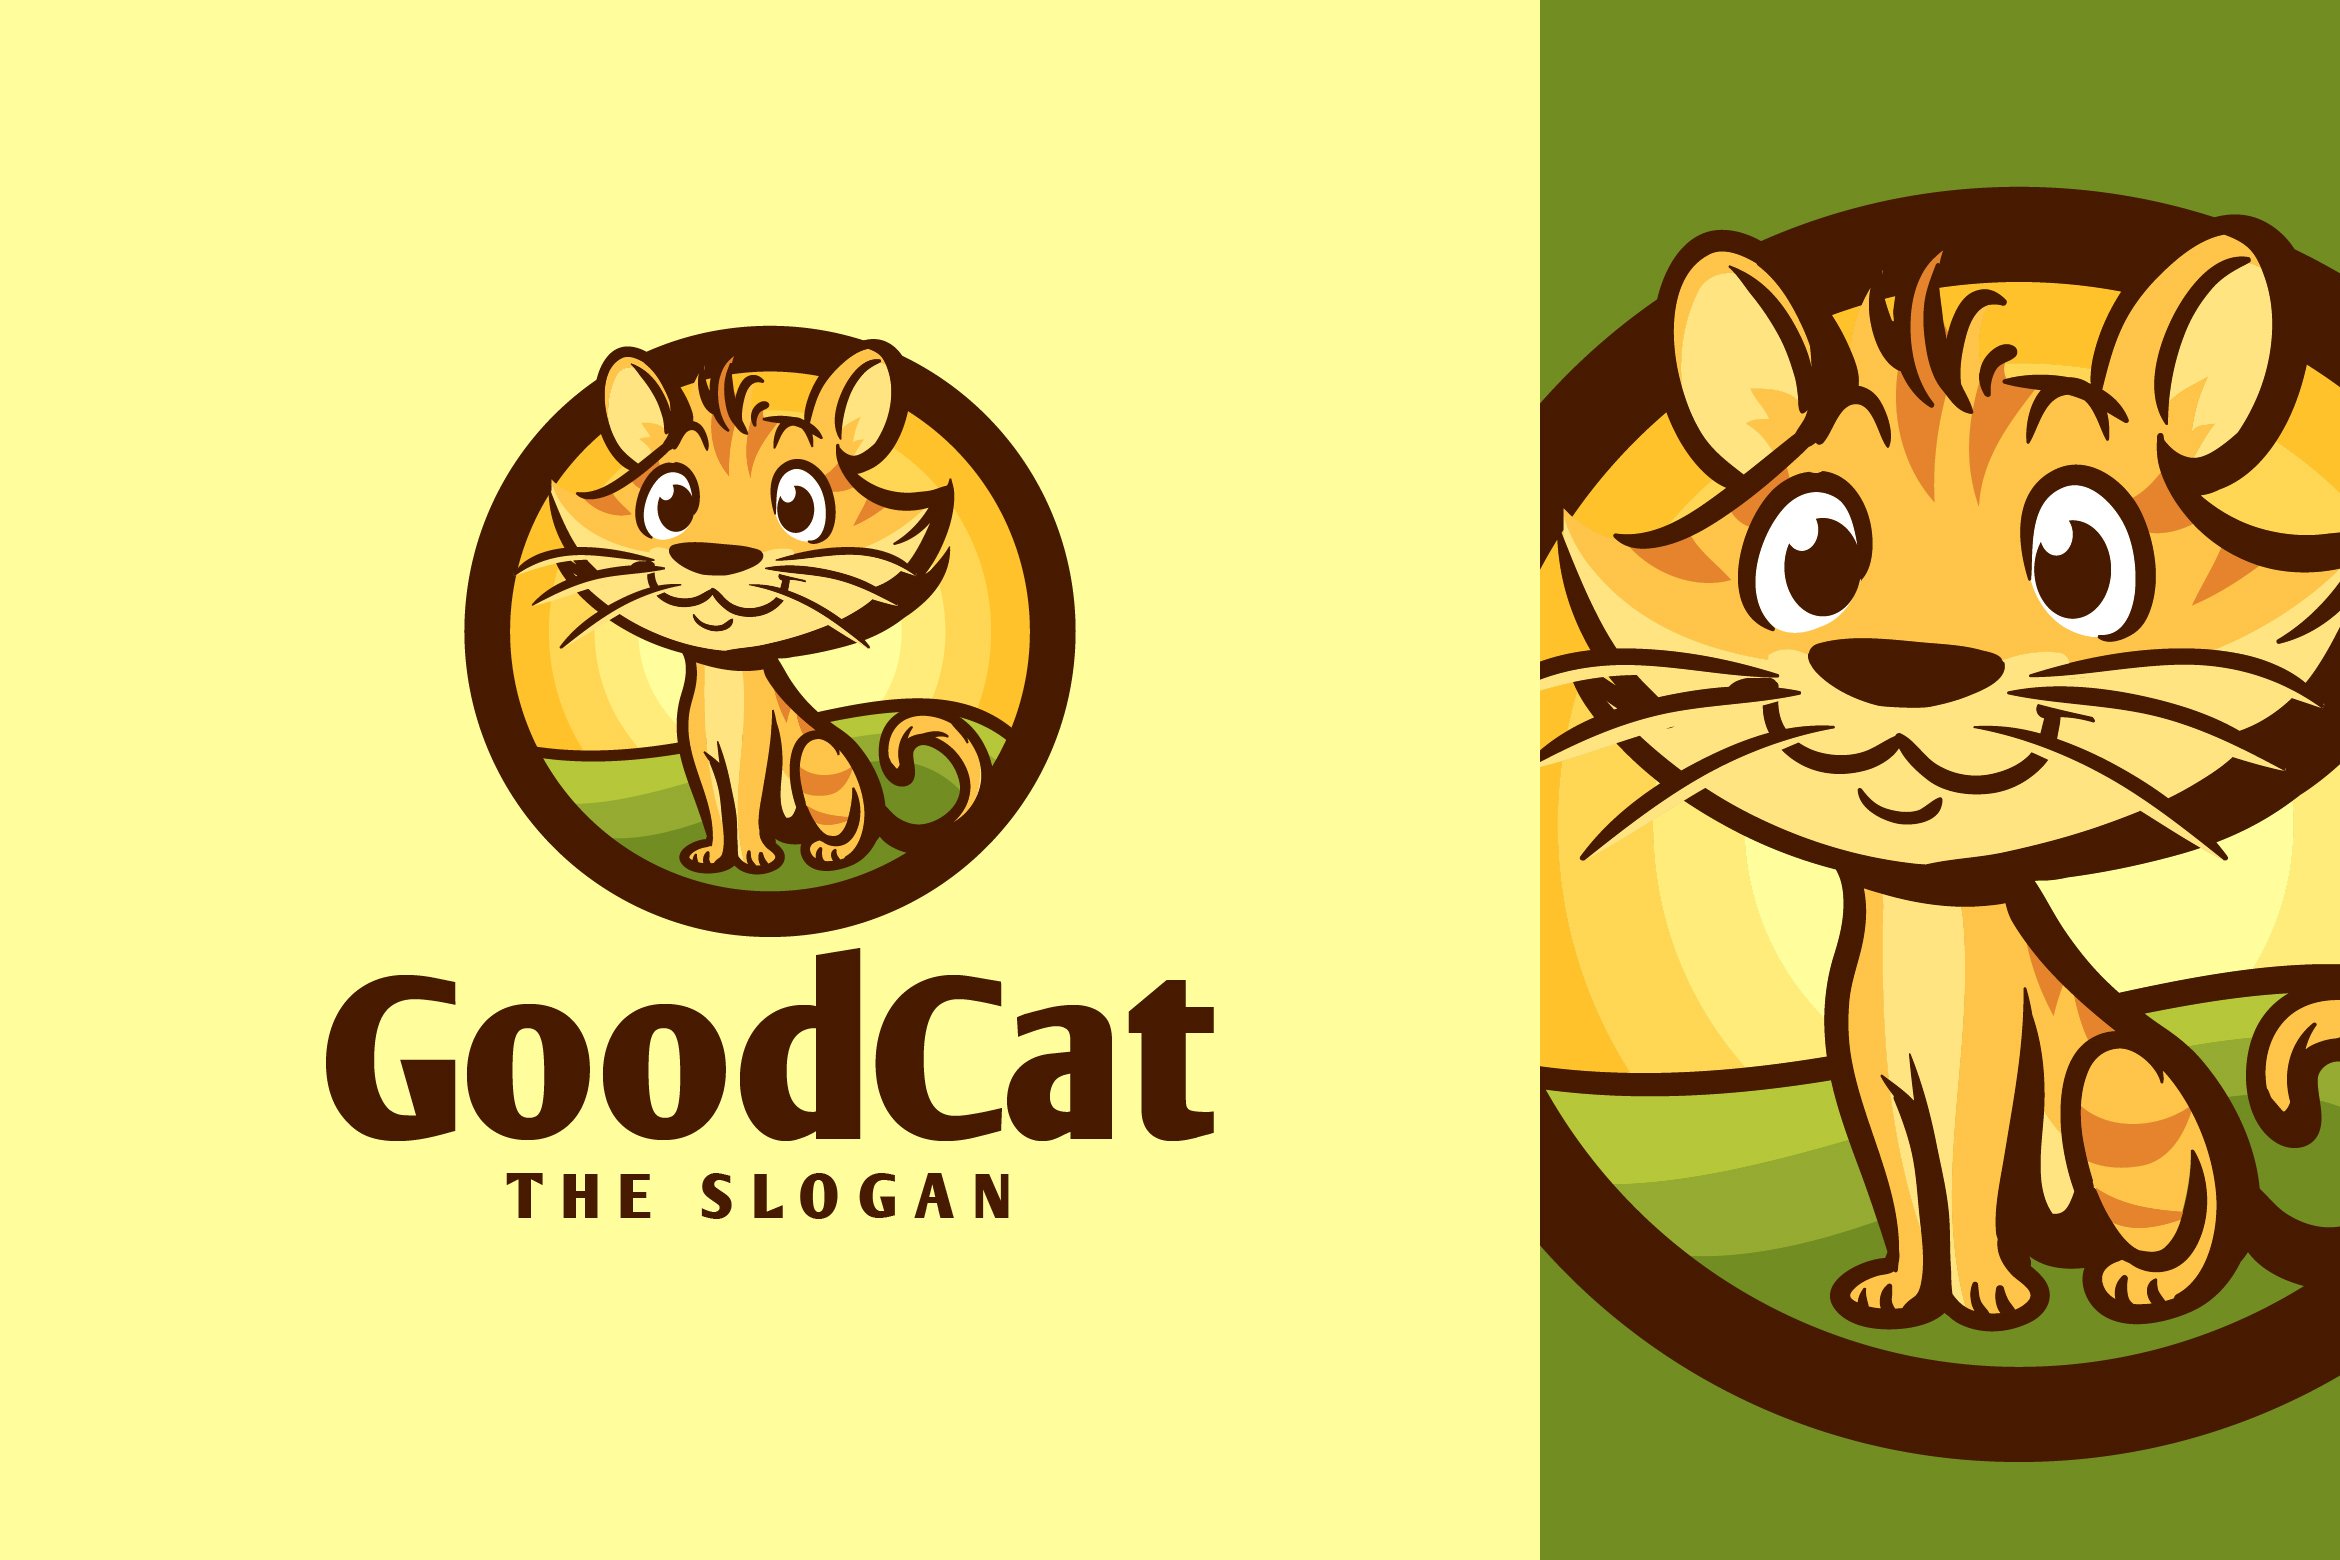 Good Cat Logo cover image.